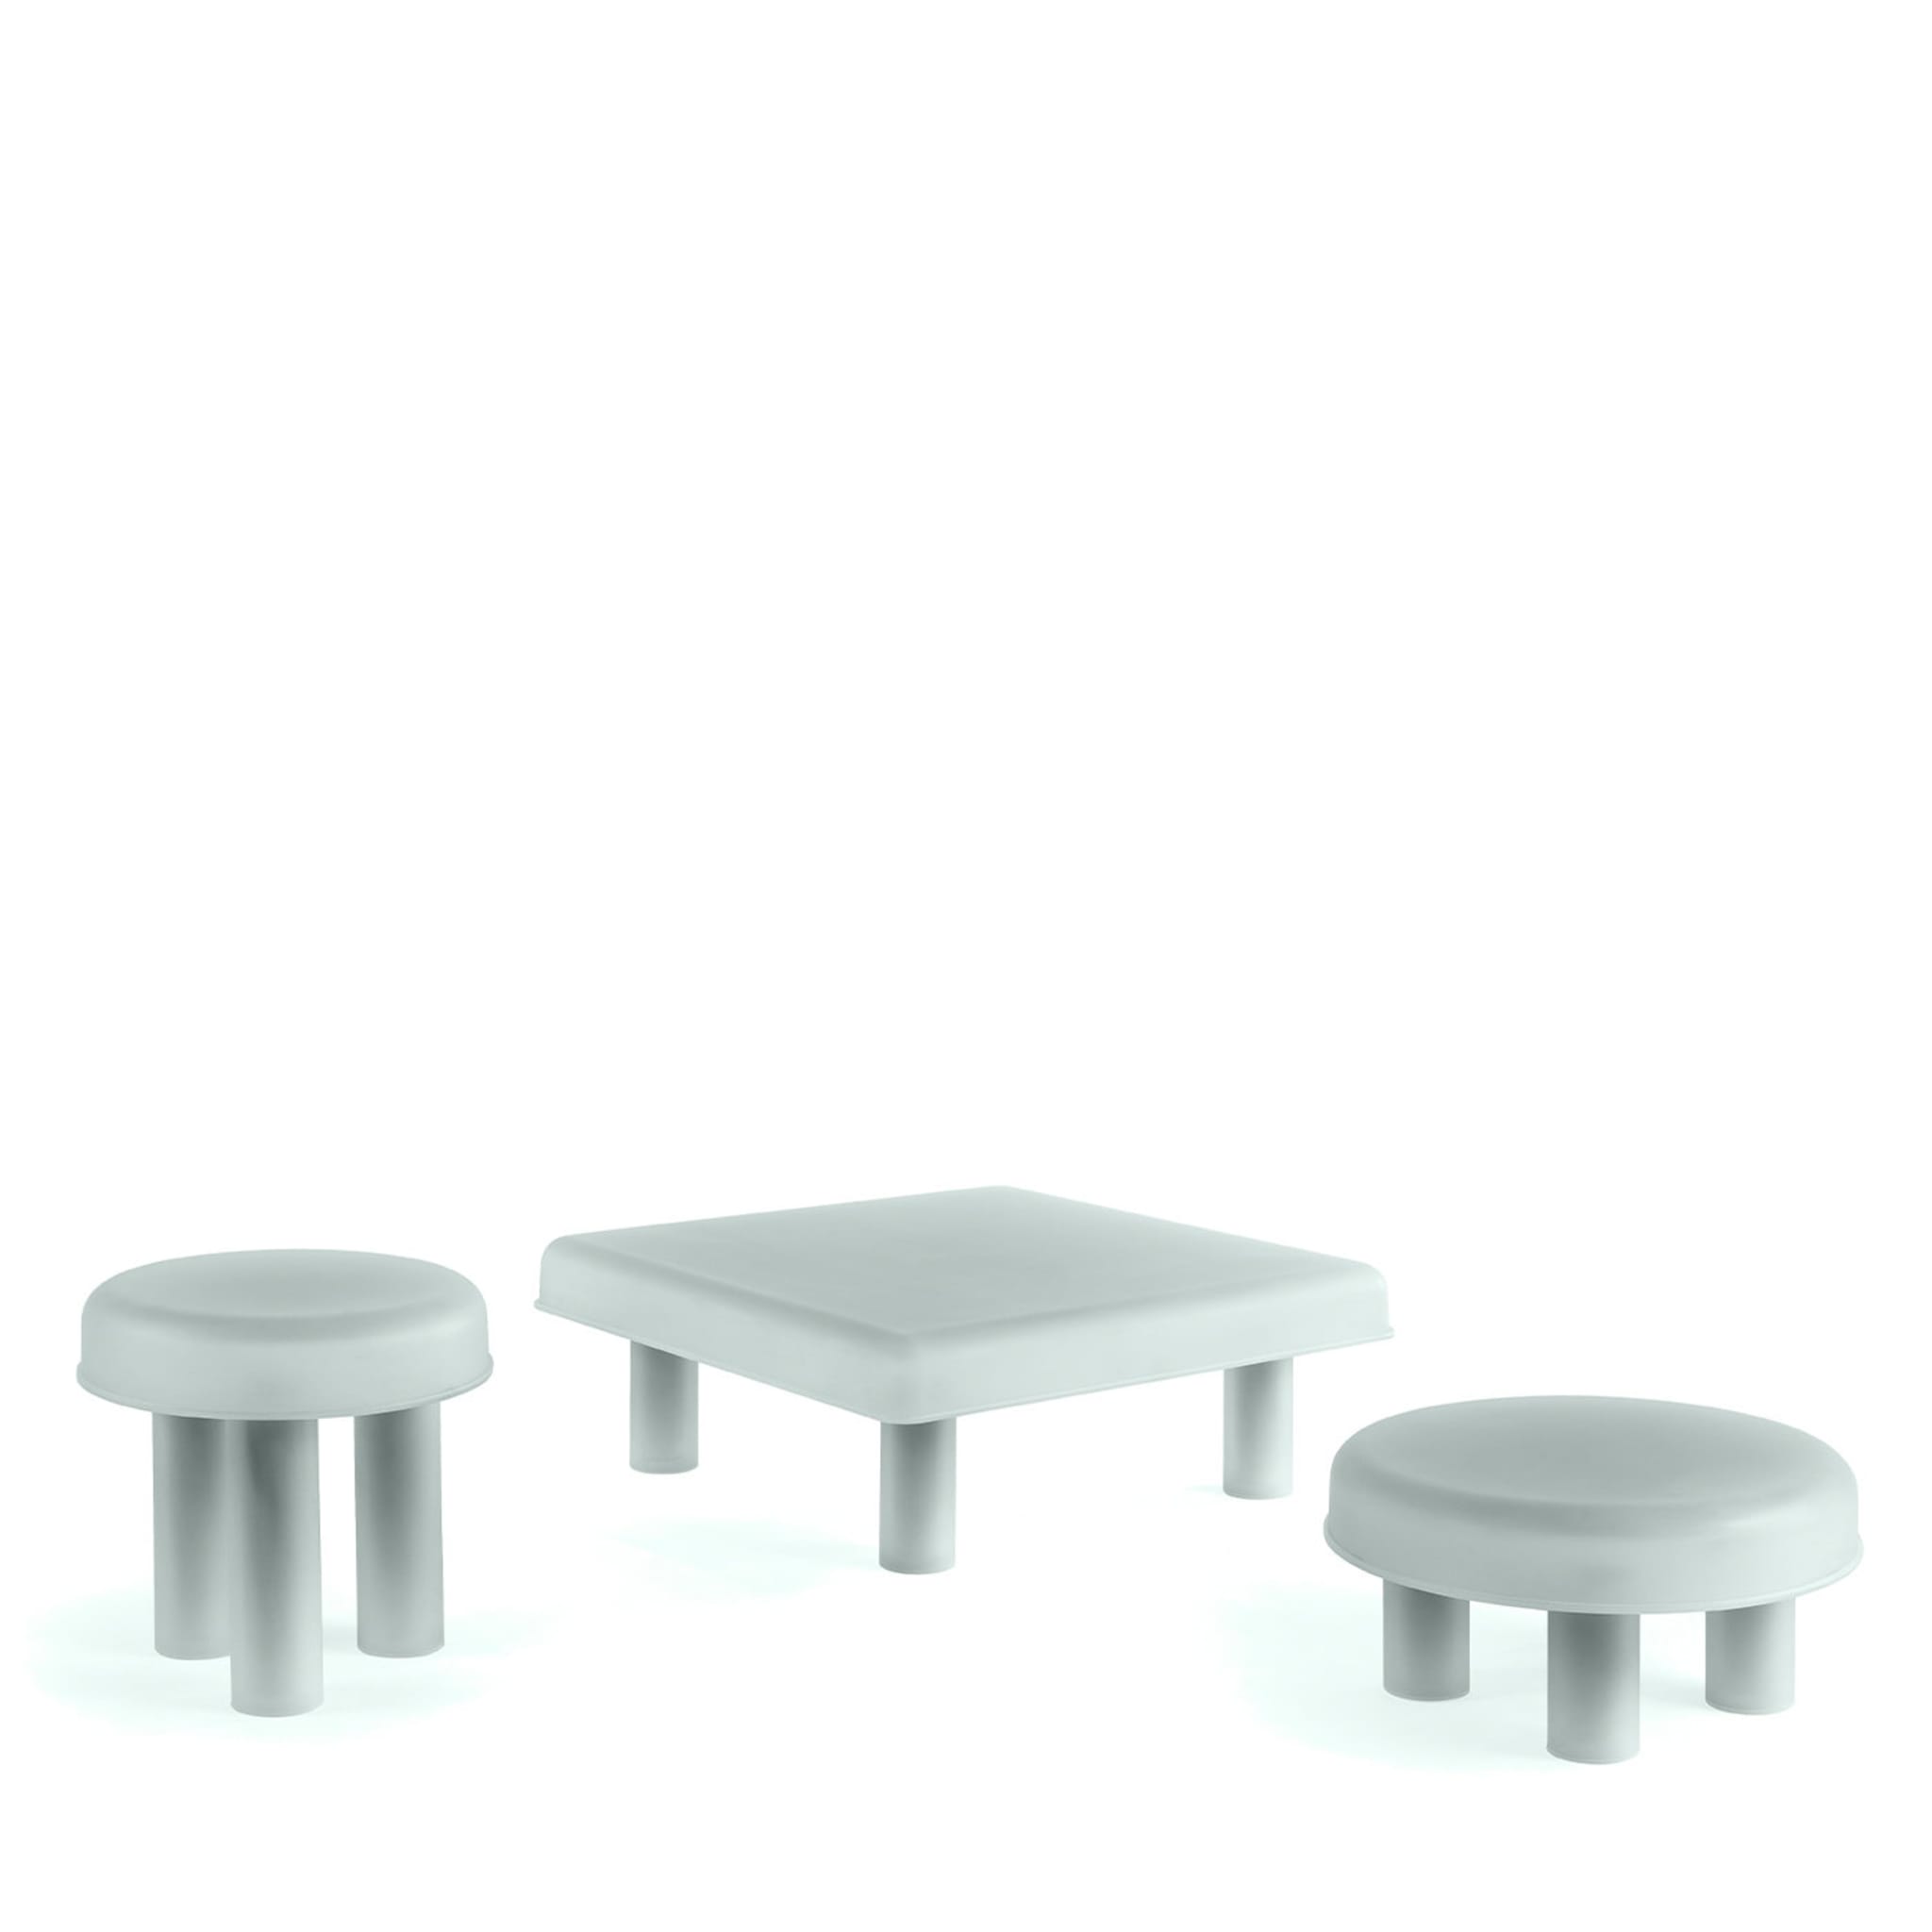 SOPOVRIA VA SIDE TABLE - Design by Sovrappensiero - Alternative view 1